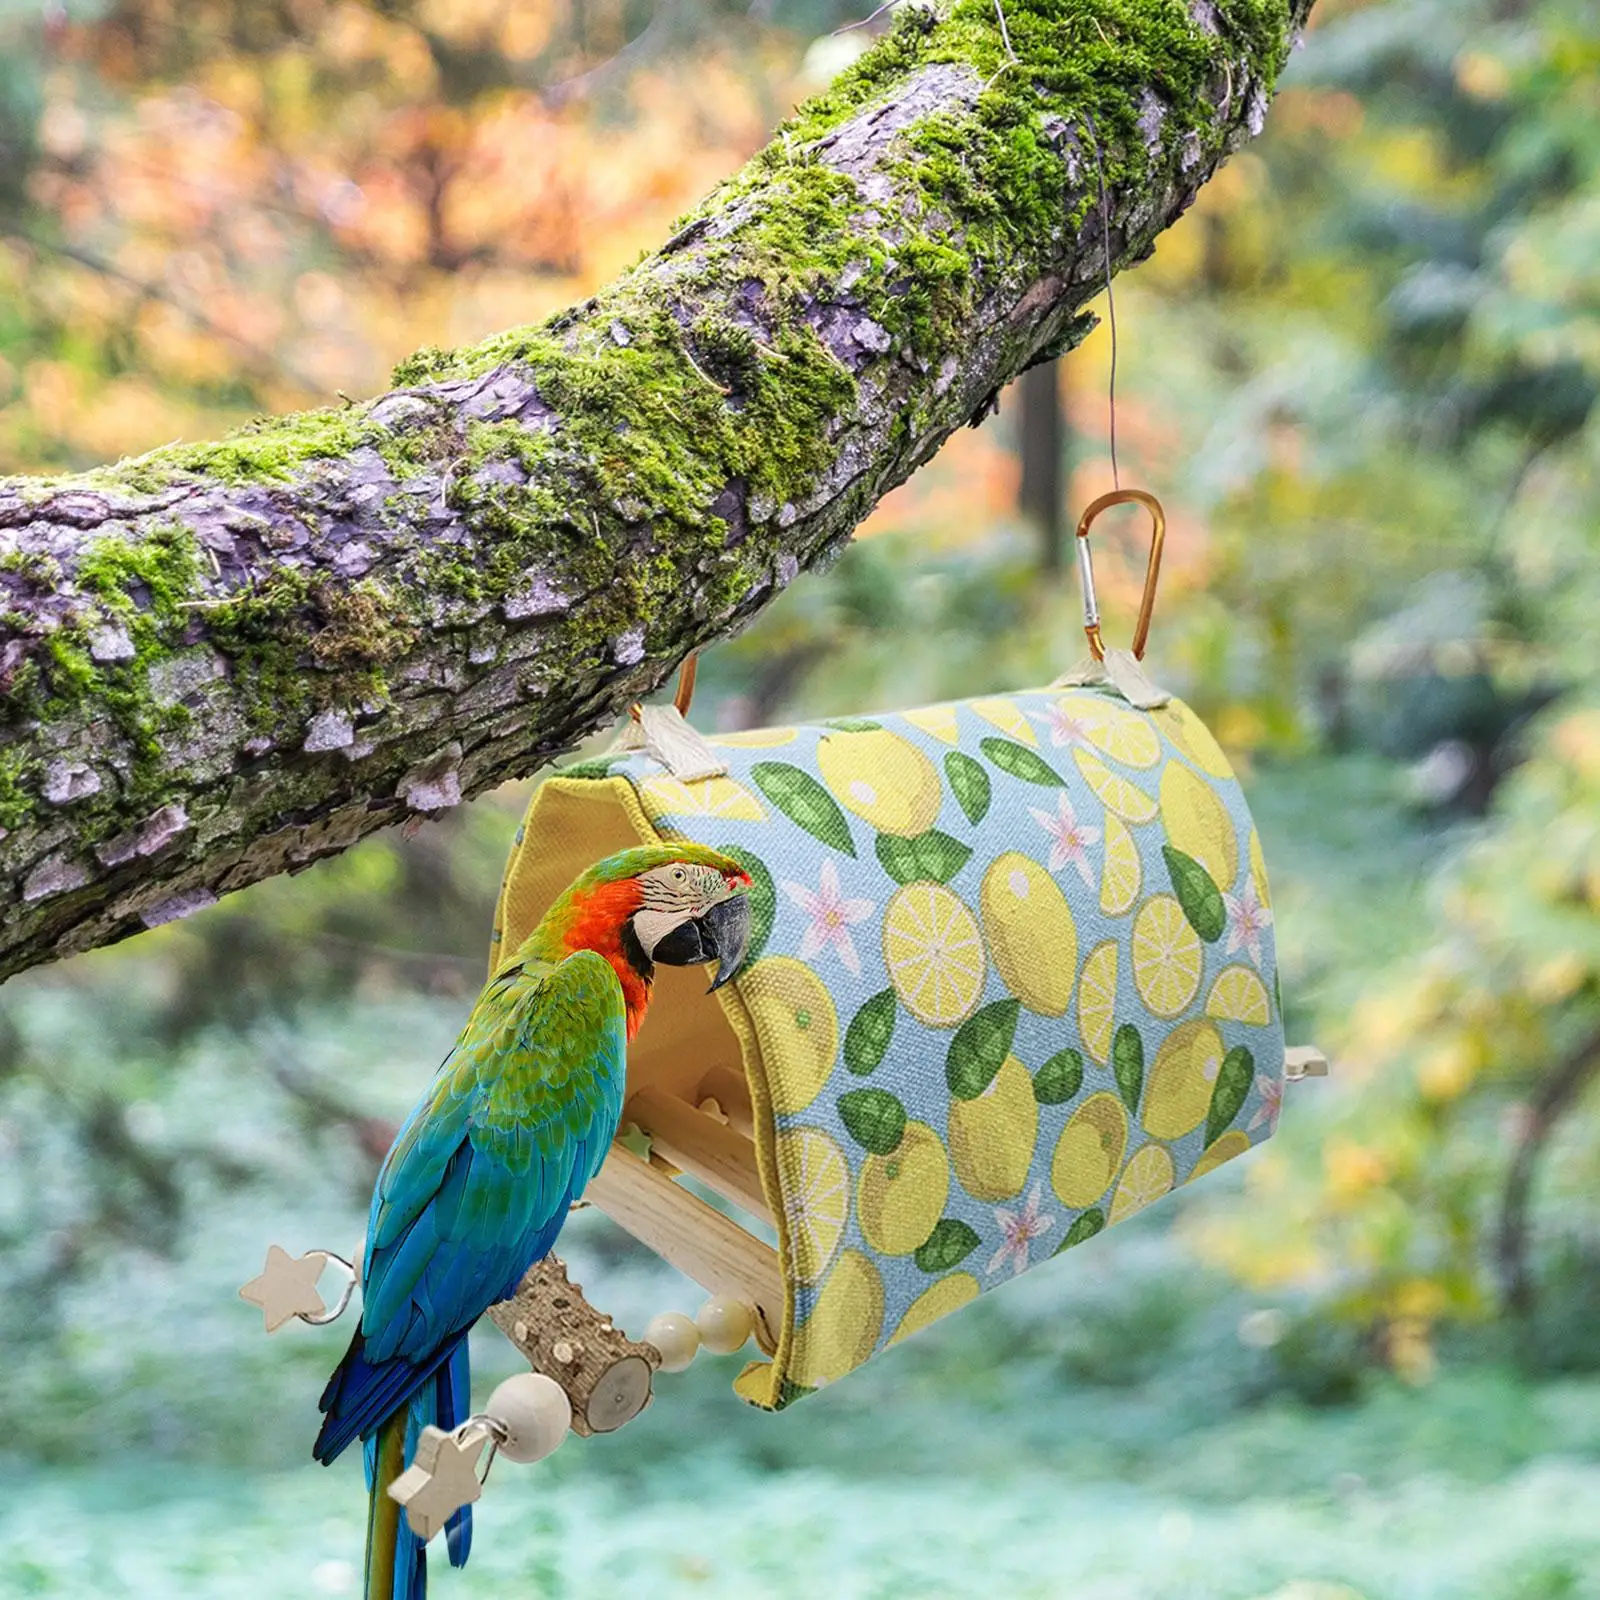 Birds Nest House Bird Toy Tent Toy Bird Cage Accessories Budgies Cockatoo Parrots Hut Wooden Stand Bird Parakeet Toy Parrot Bed